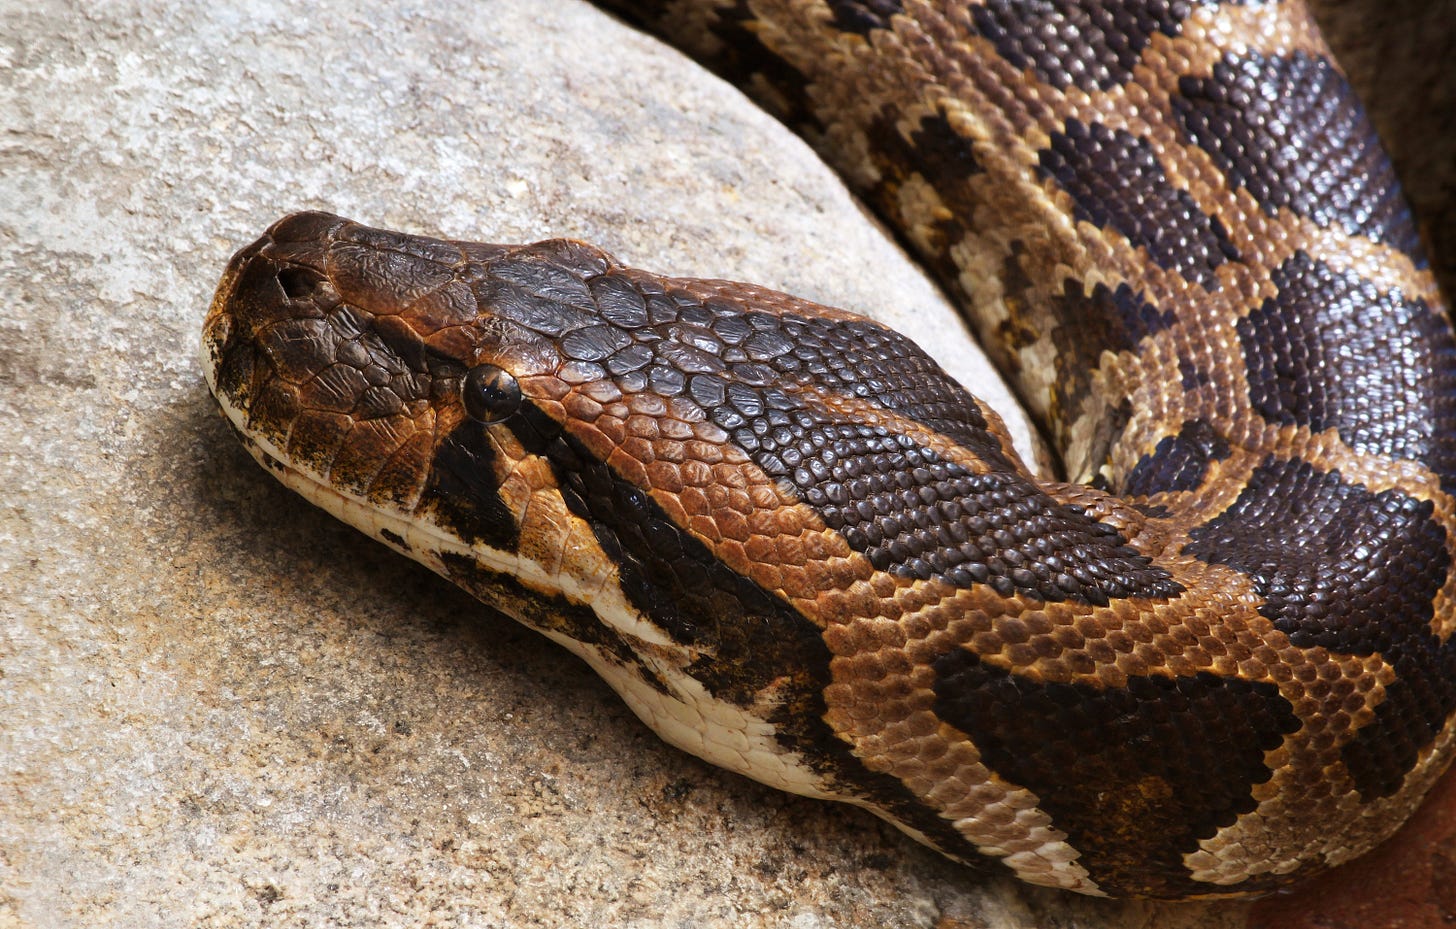 File:Heller Tigerpython Python molurus molurus.jpg - Wikimedia Commons